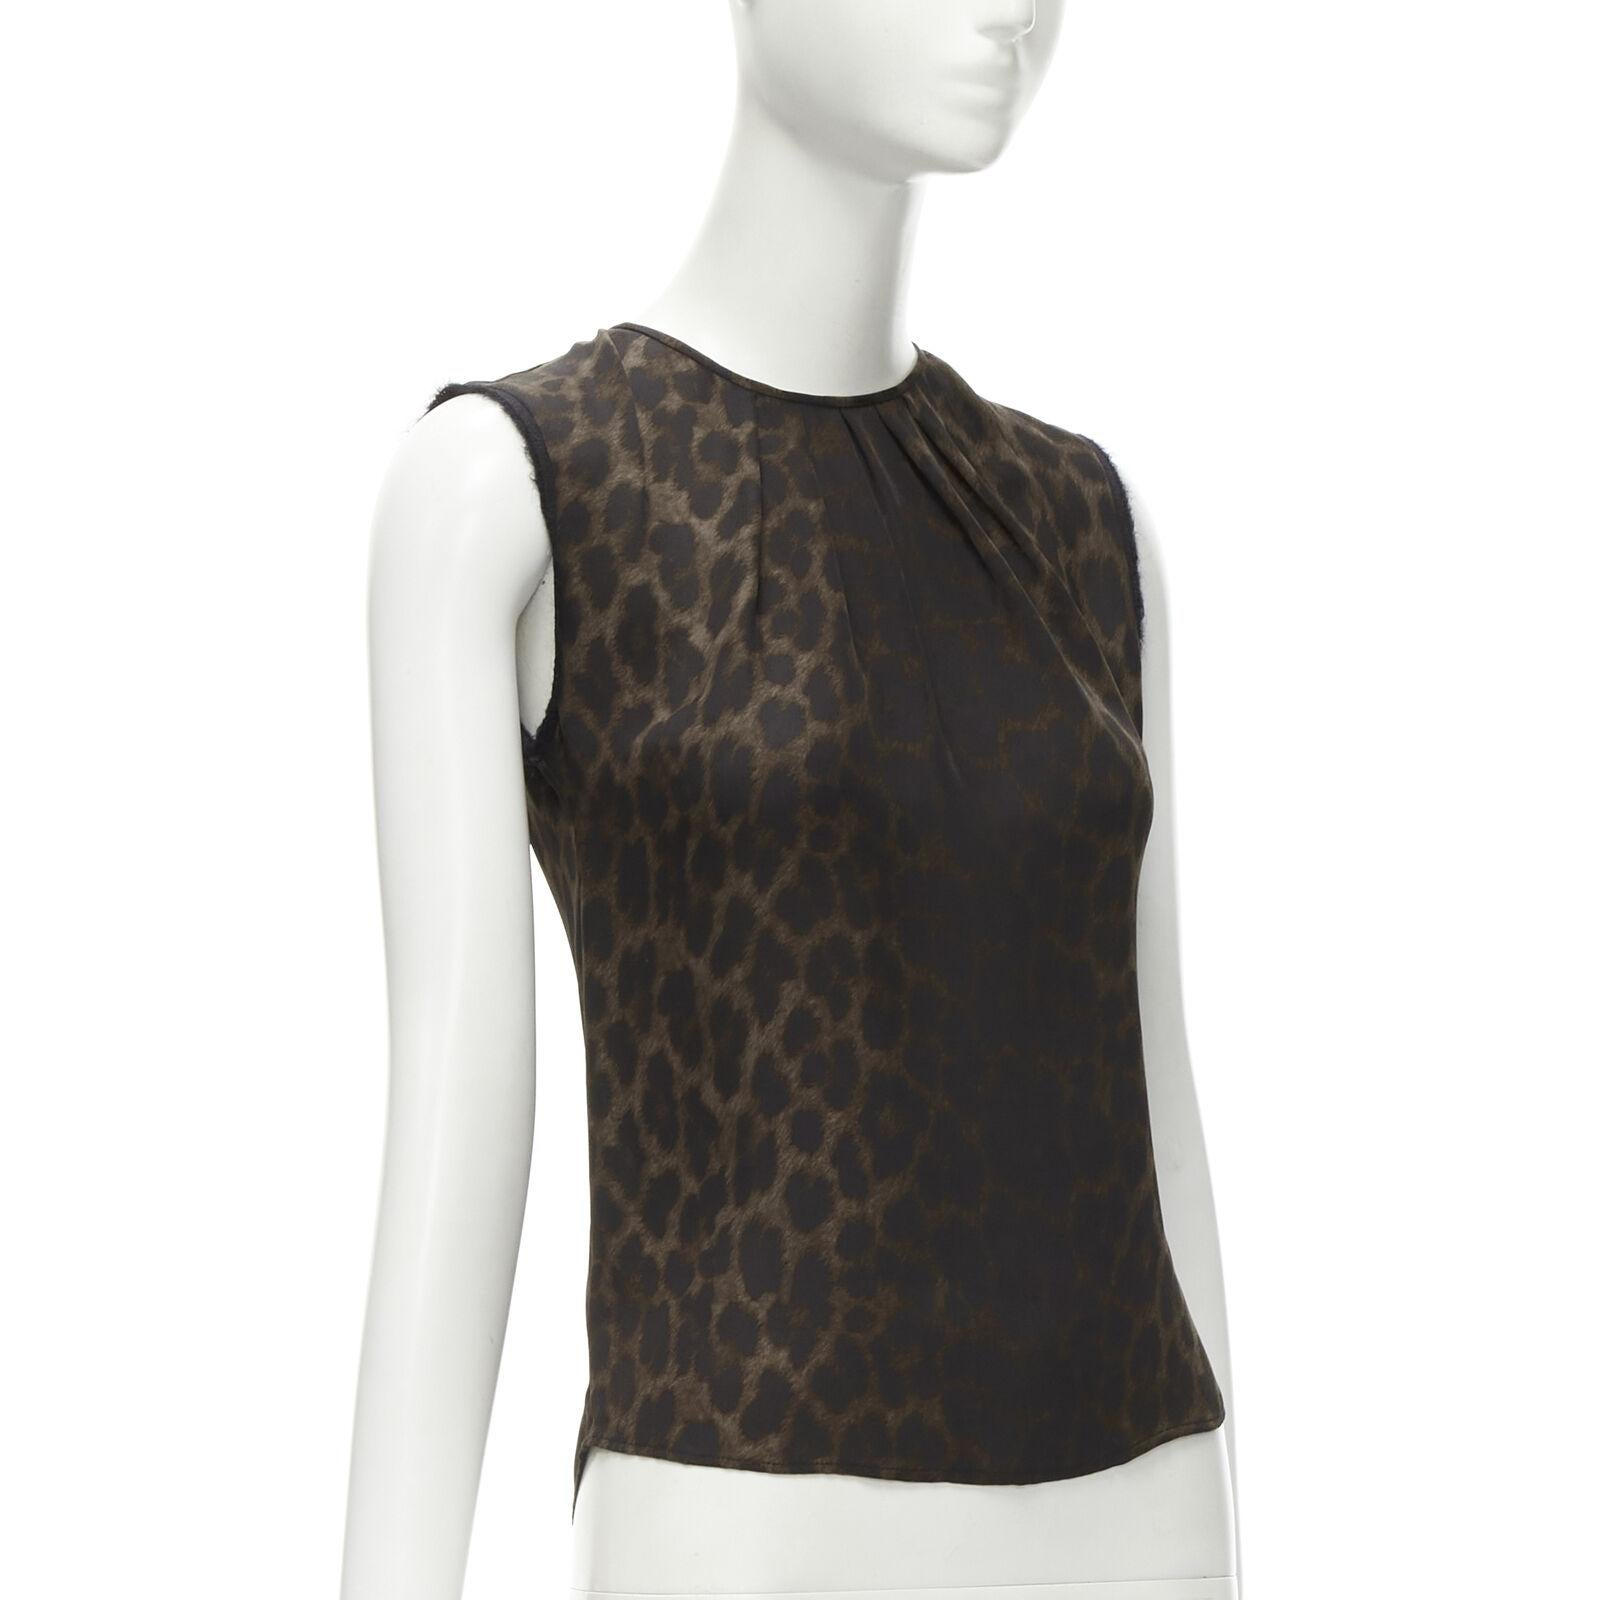 GIAMBATTISTA VALLI silk brown black ombre leopard gathered neck vest IT38 XS
Reference: LNKO/A02063
Brand: Giambattista Valli
Designer: Giambattista Valli
Material: 100% Silk
Color: Brown, Black
Pattern: Leopard
Closure: Zip
Made in: